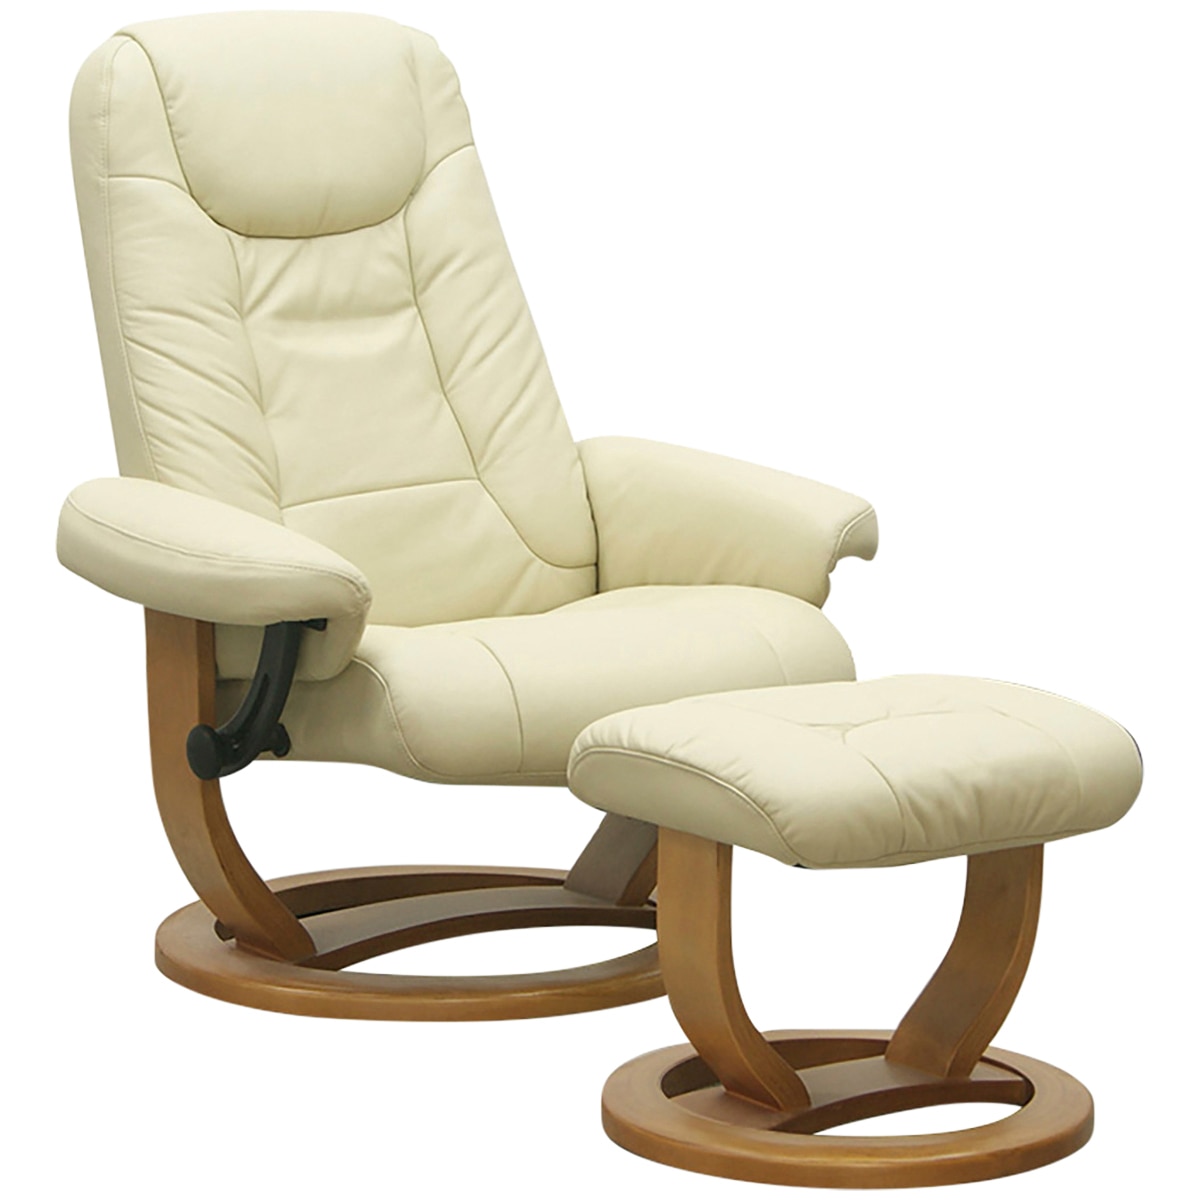 Moran Maitland Large Chair And Ottoman Set Costco Australia